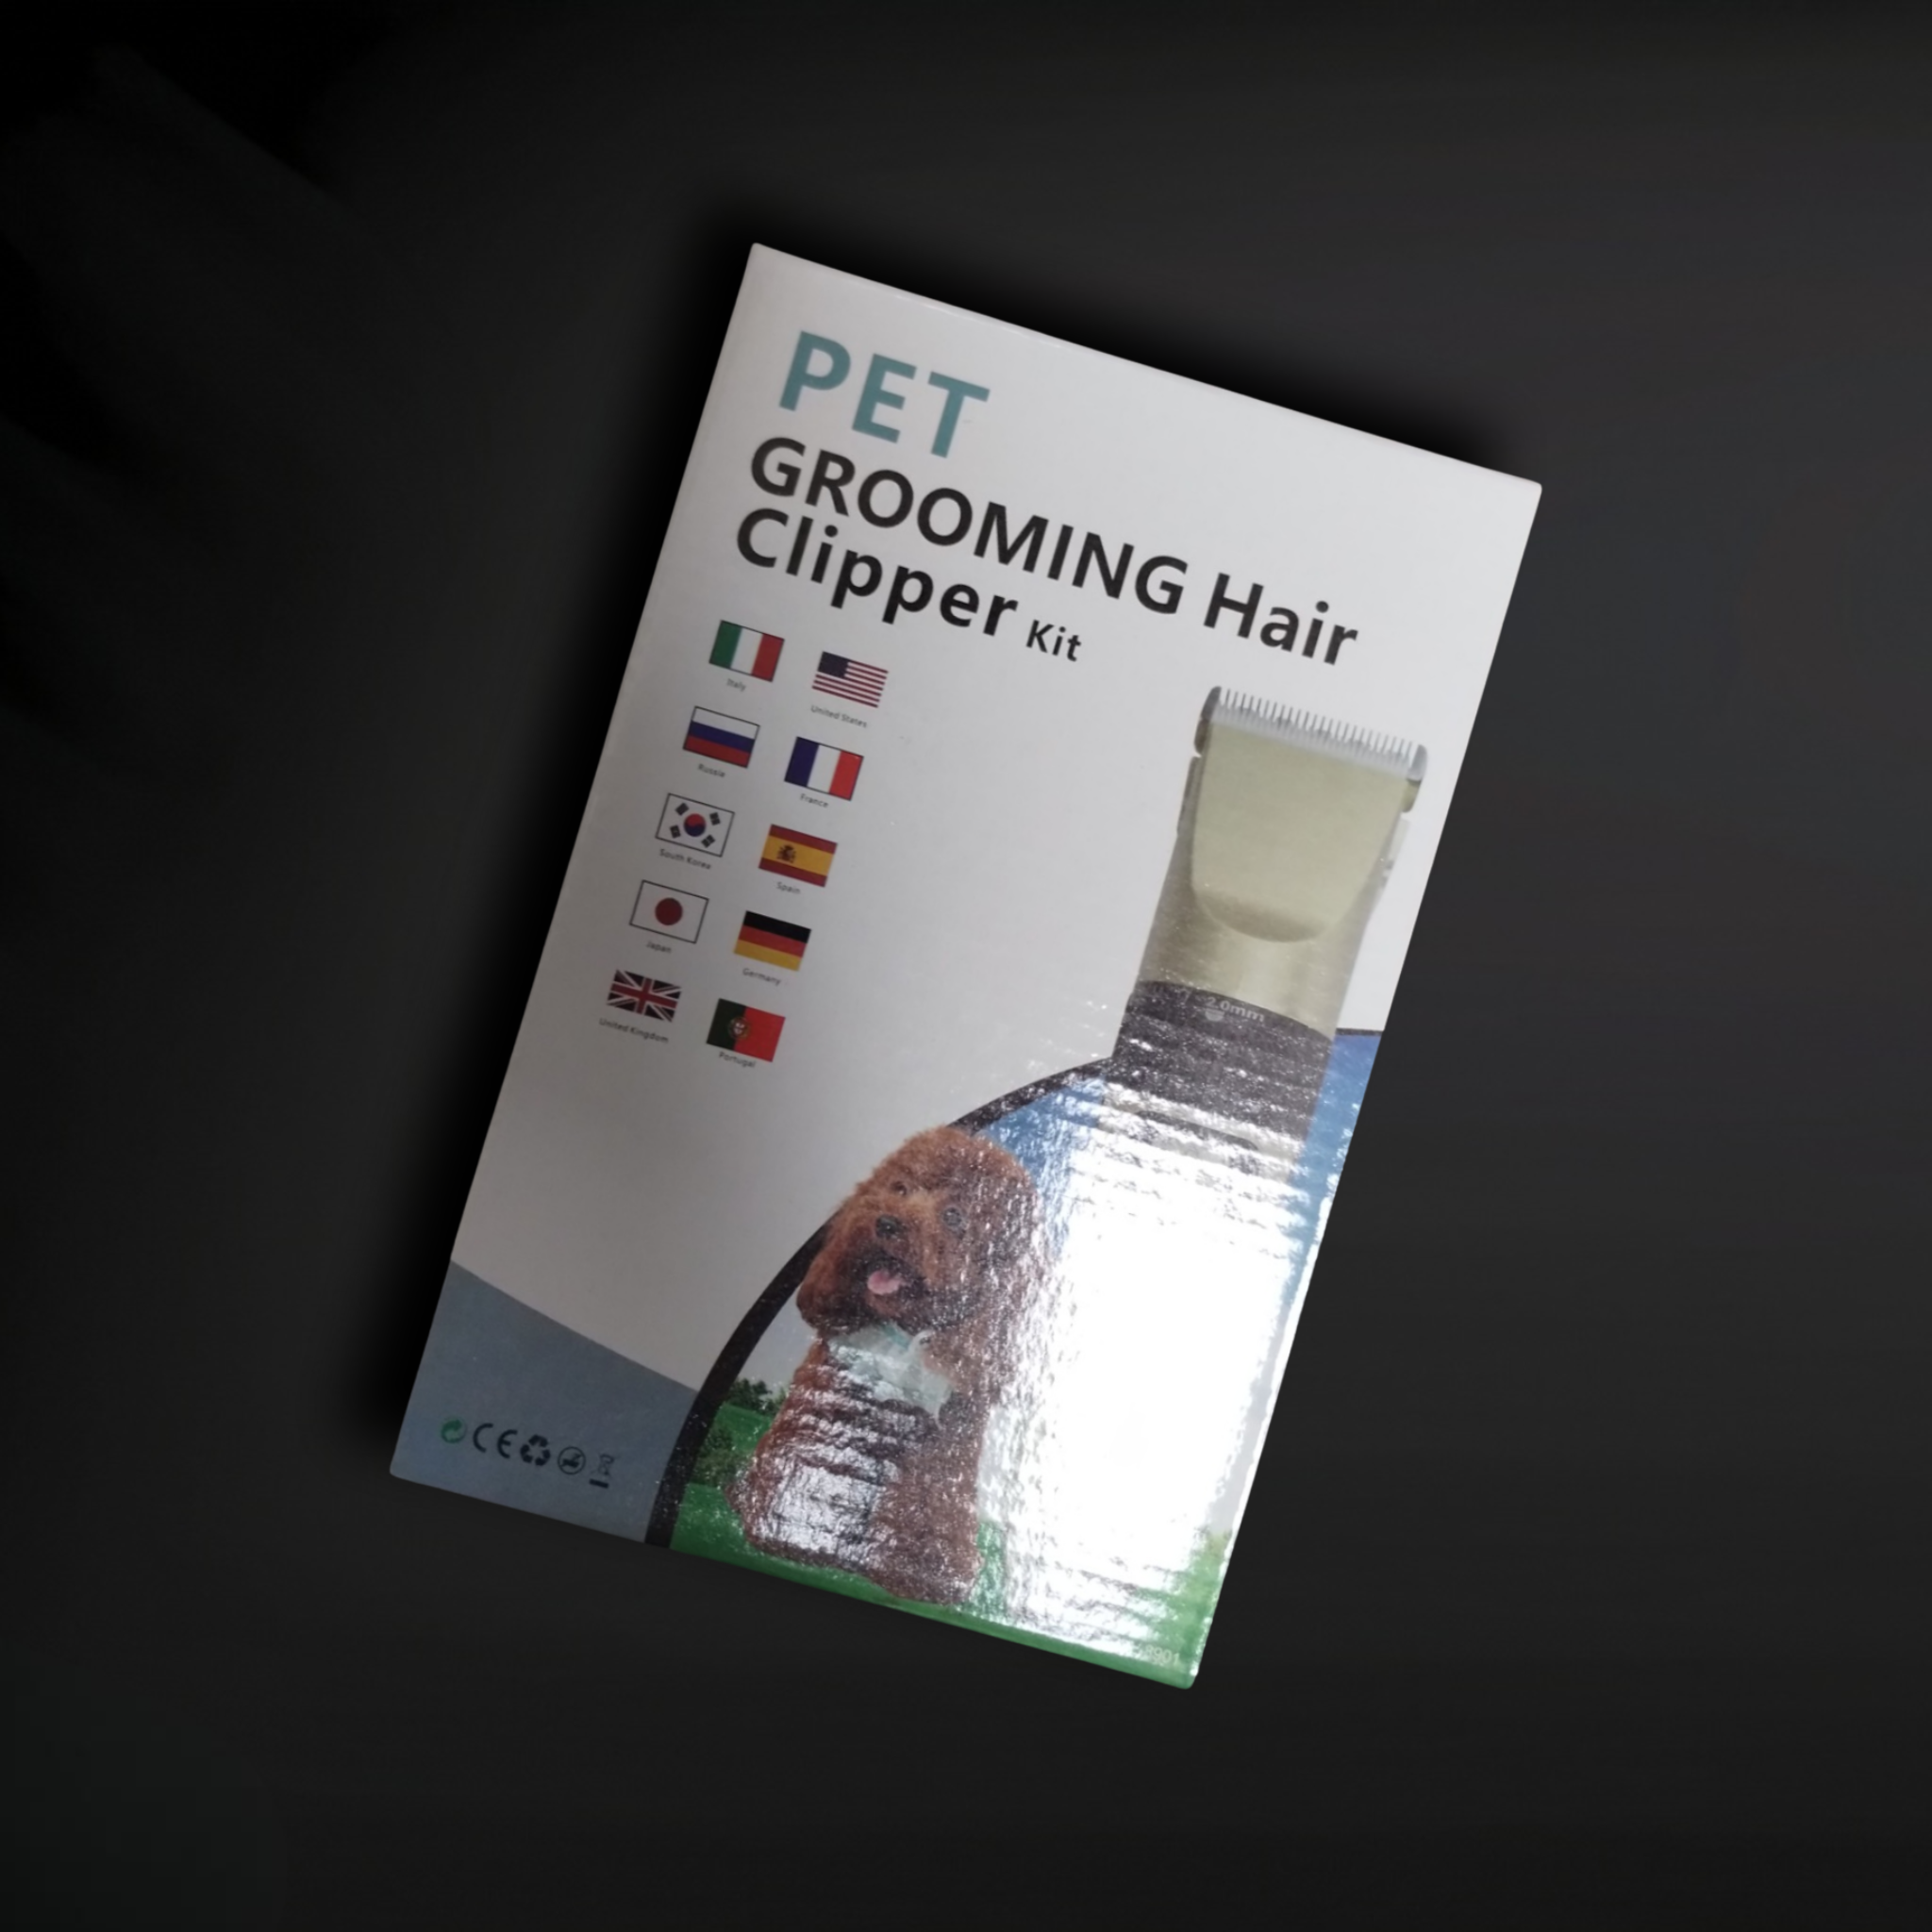 Pet Grooming HAIR Clipper Set